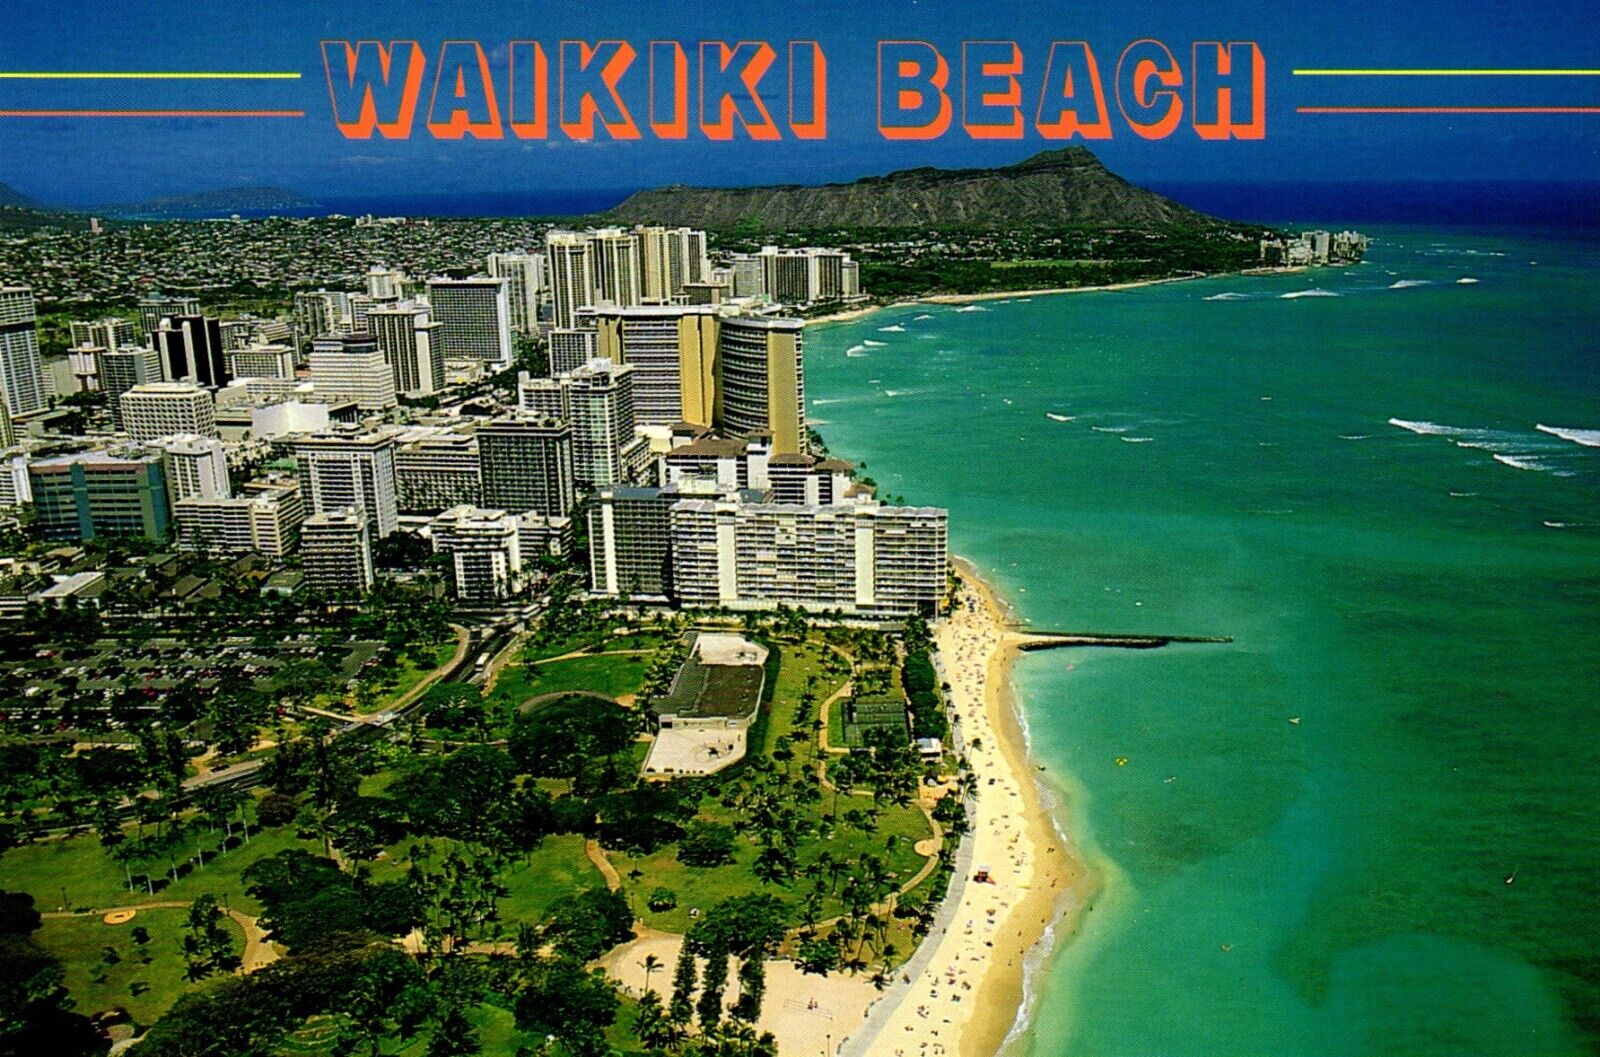 Fort Derussy Park Waikiki Beach Hawaii Postcard